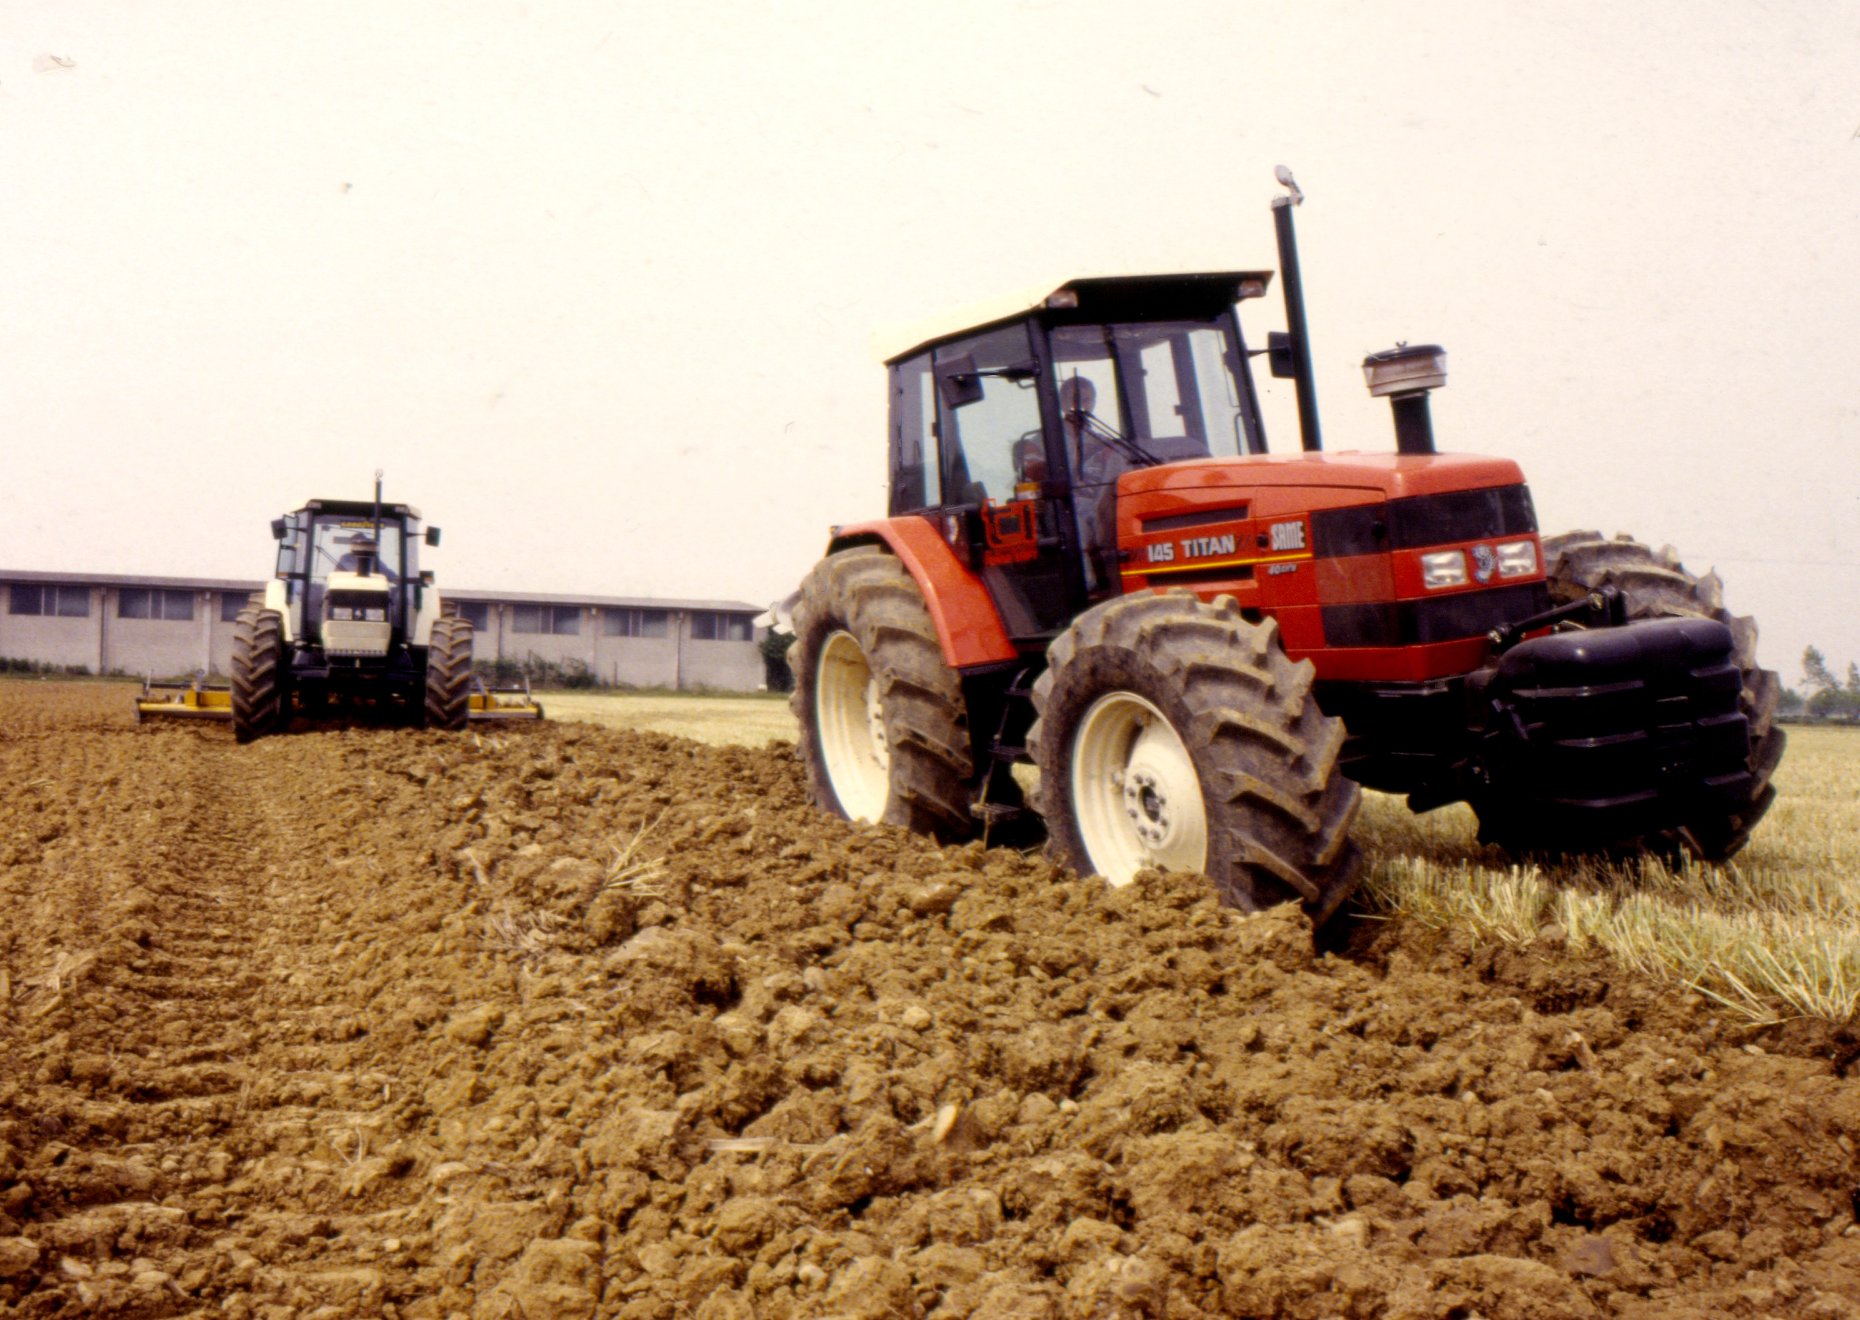 SAME Titan 145 Traktor (Quelle SDF Archiv)